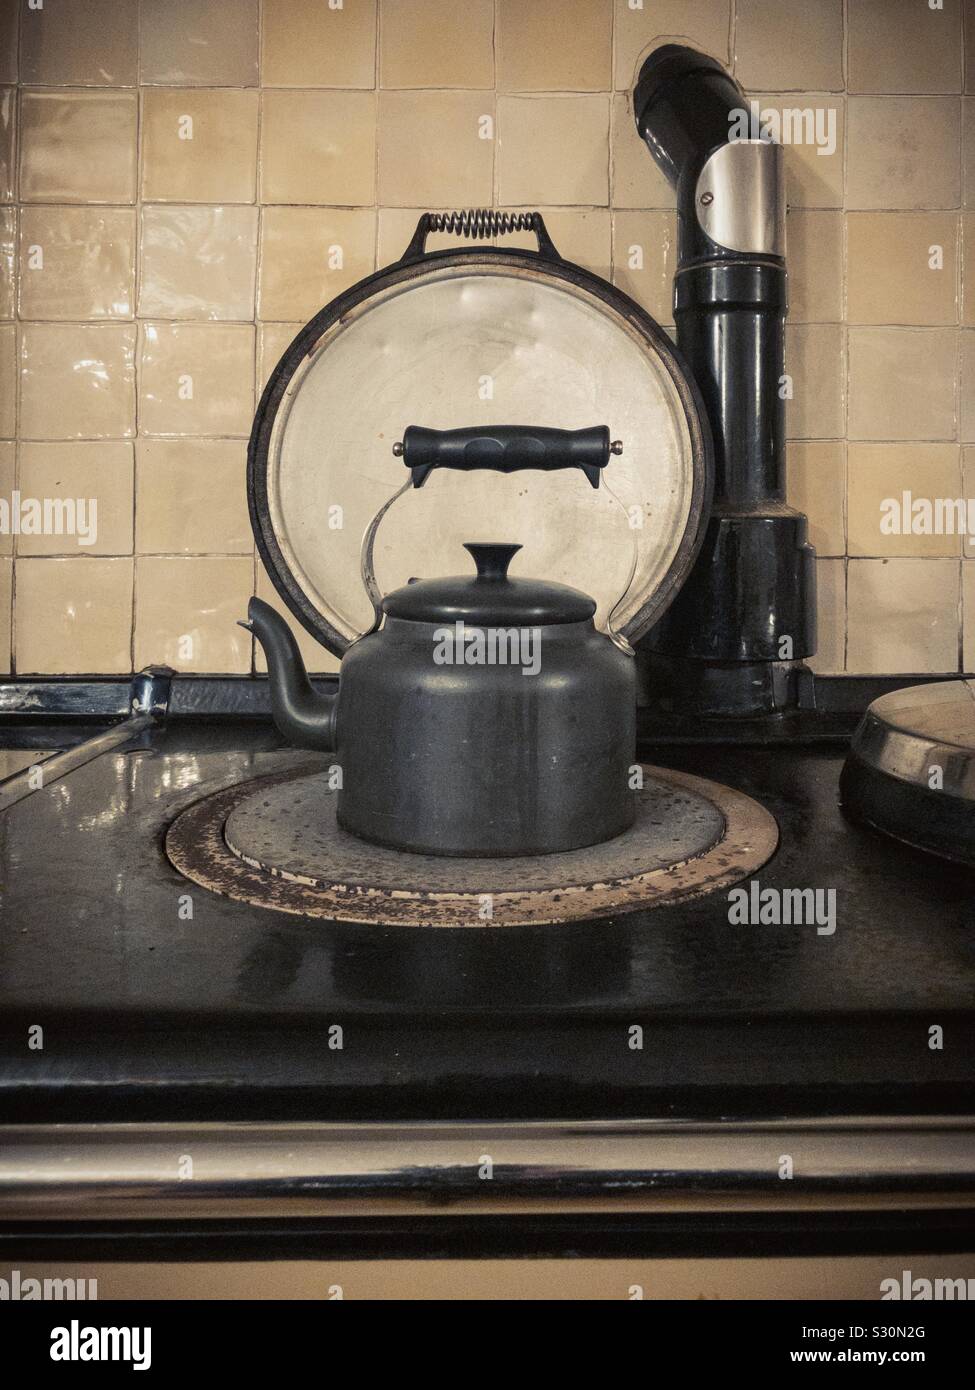 https://c8.alamy.com/comp/S30N2G/kettle-boiling-on-hob-on-aga-cooking-range-S30N2G.jpg